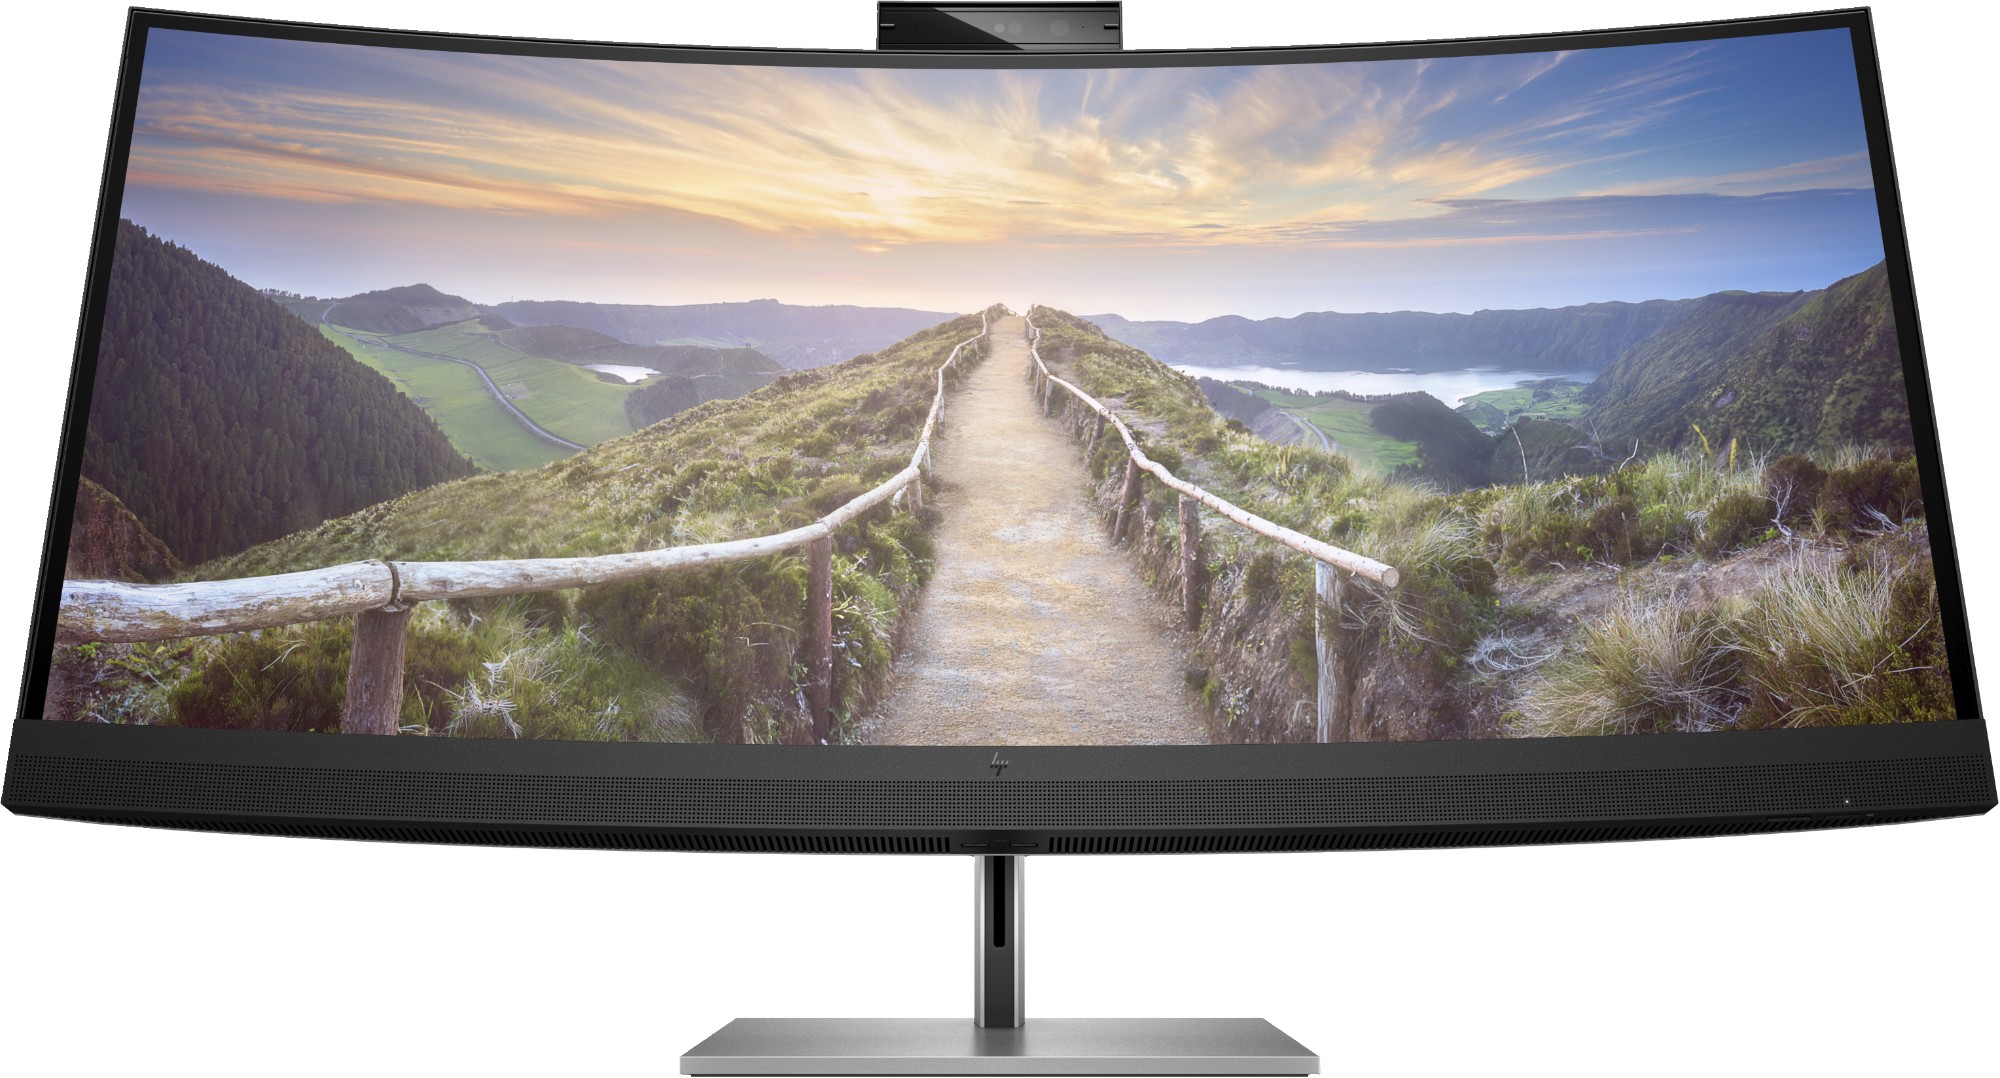 HP Z40c G3 computer monitor 100.8 cm (39.7